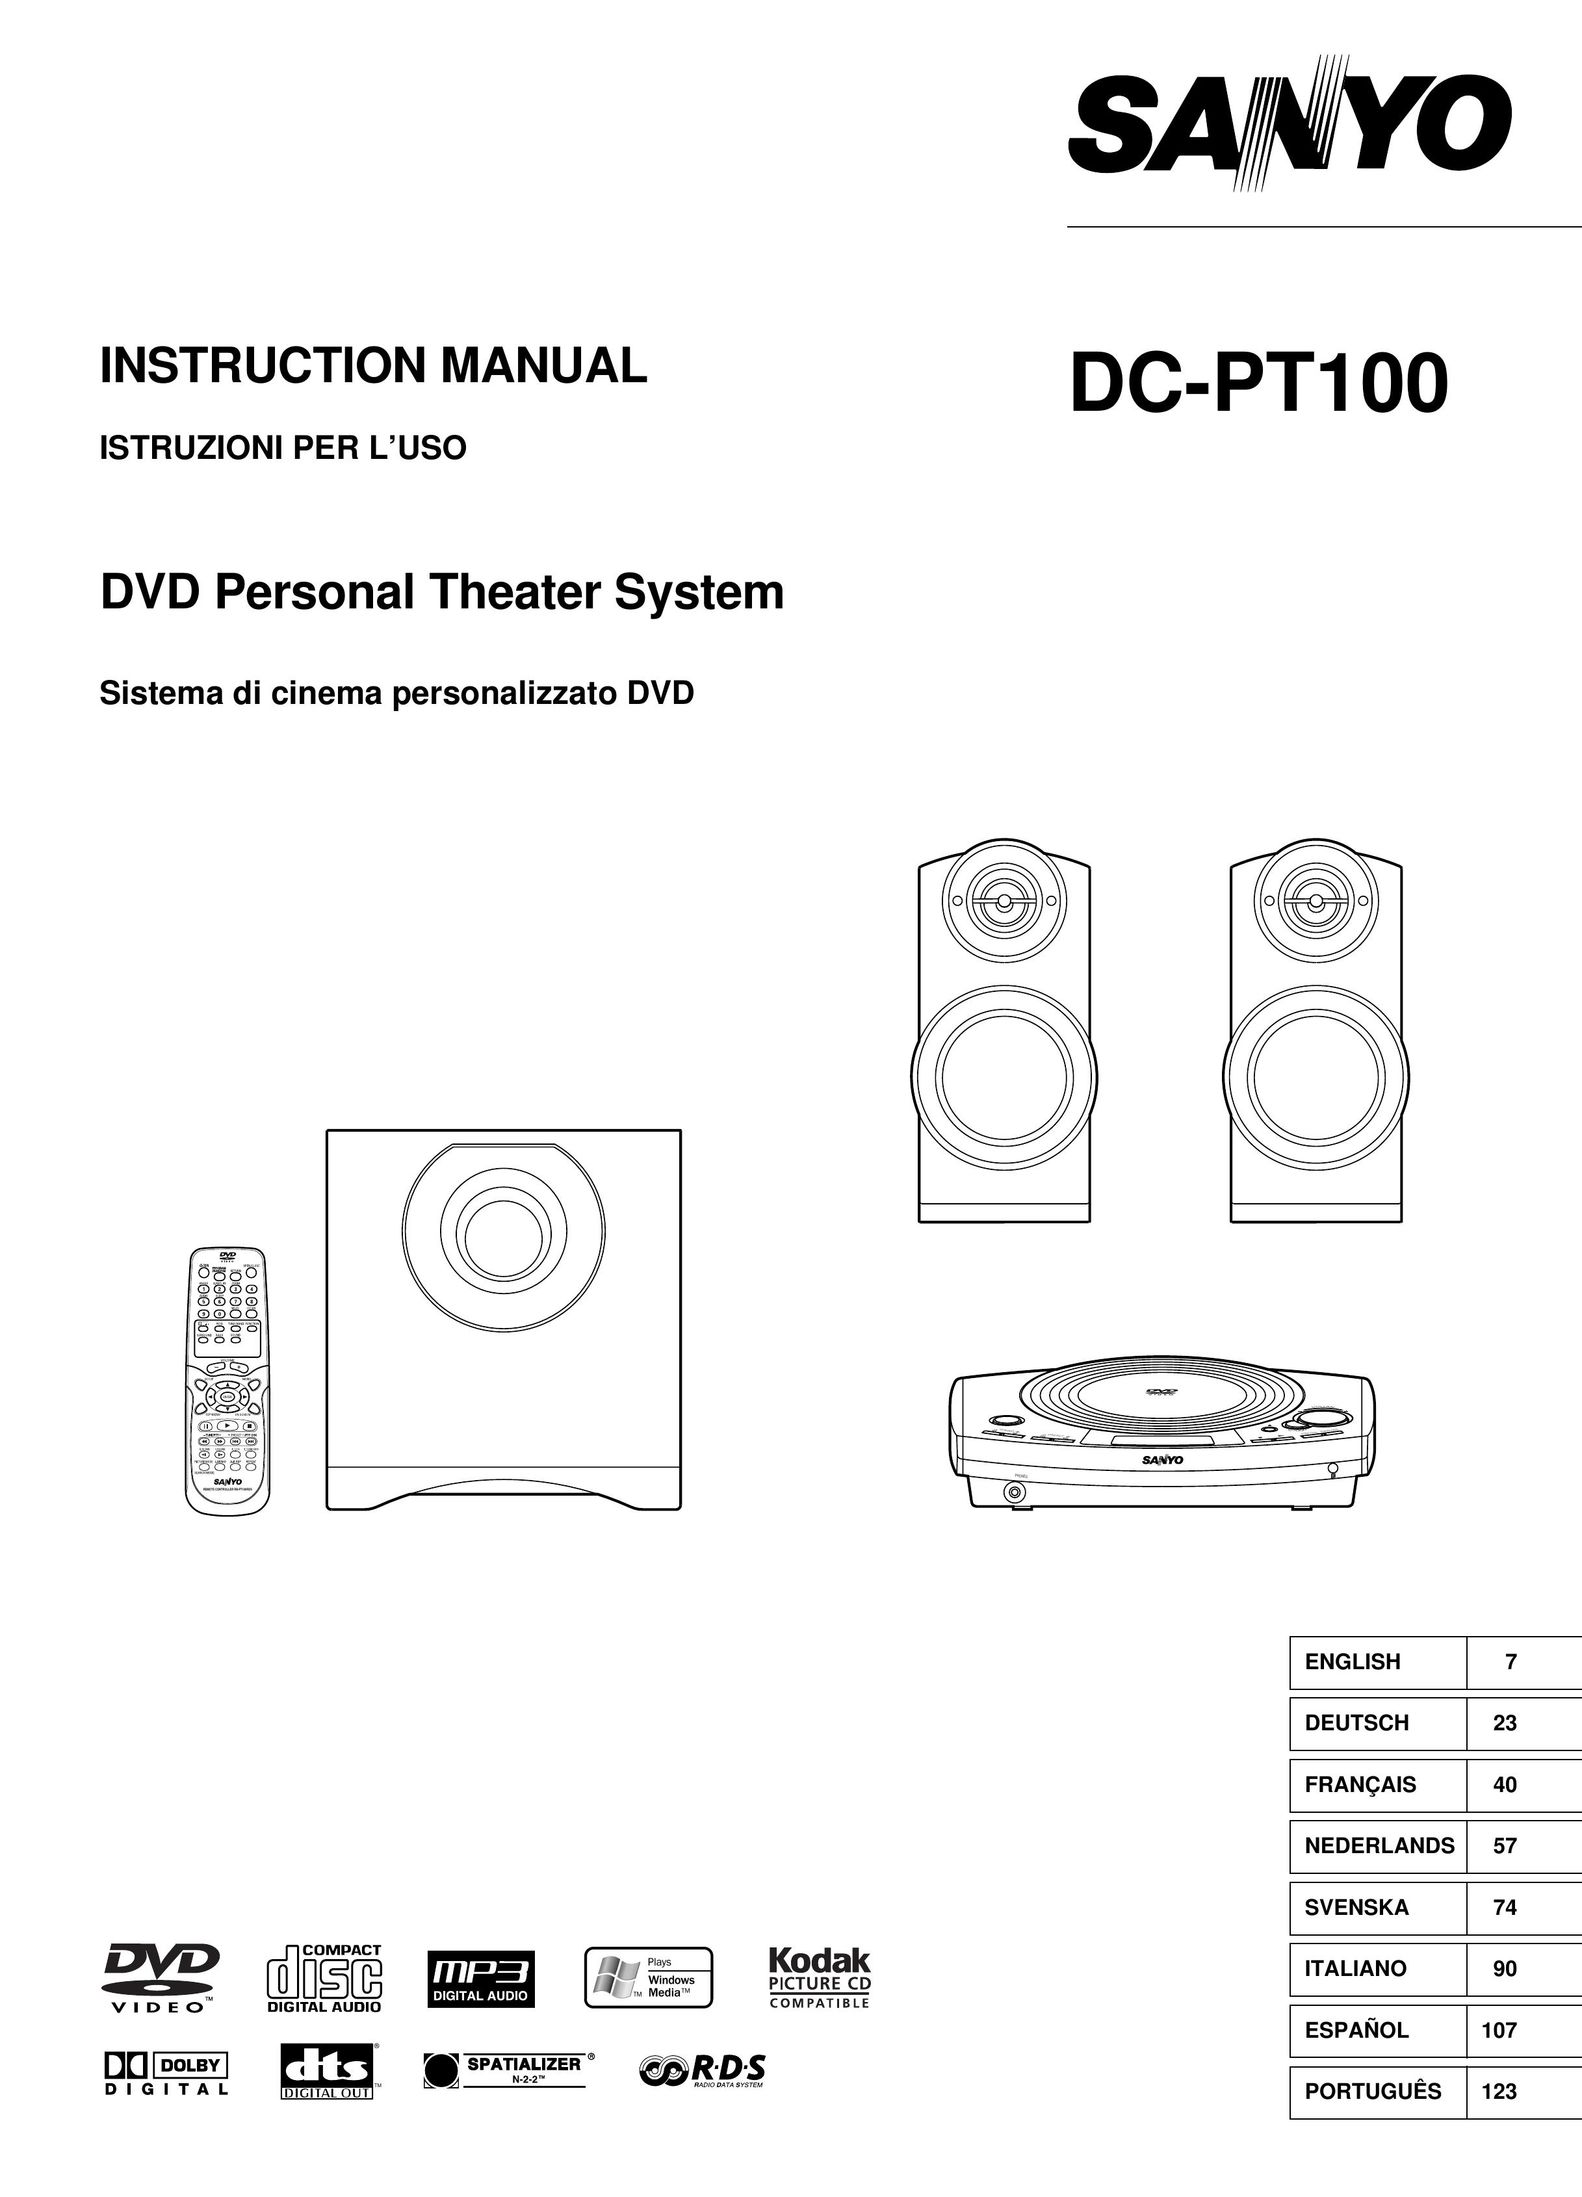 Unwind DC-PT100 DVD Player User Manual